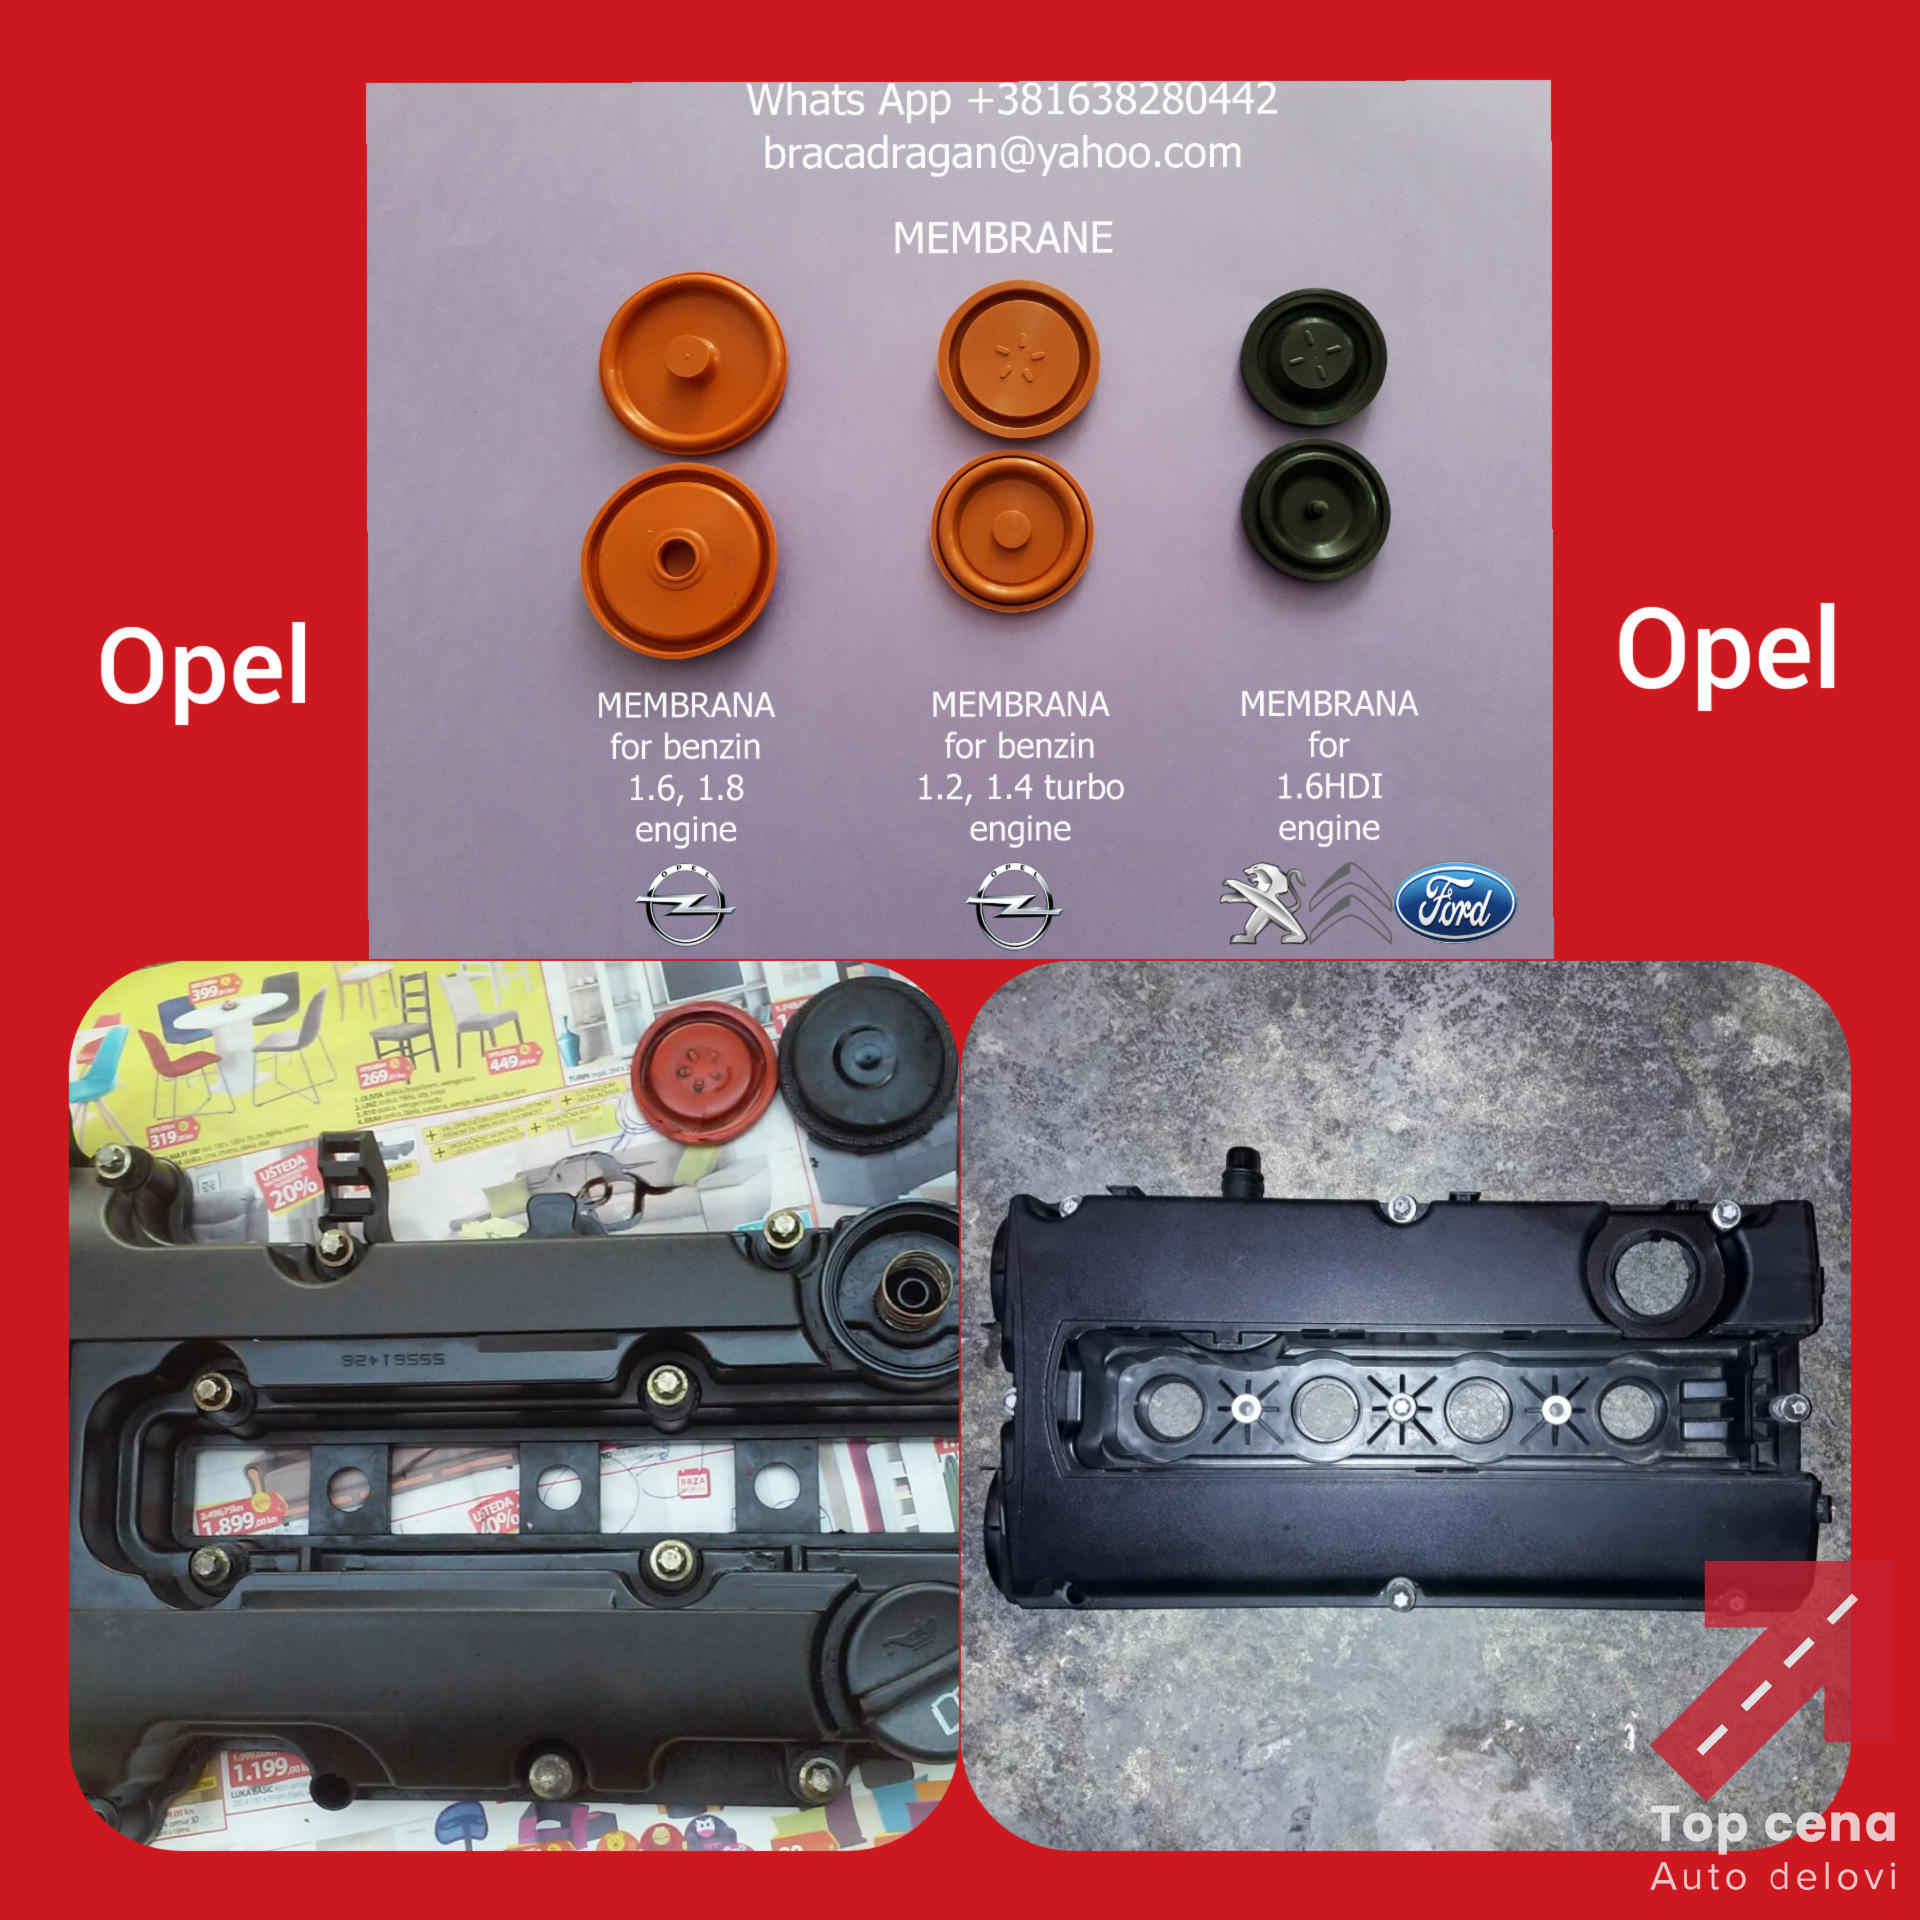 Opel membrane